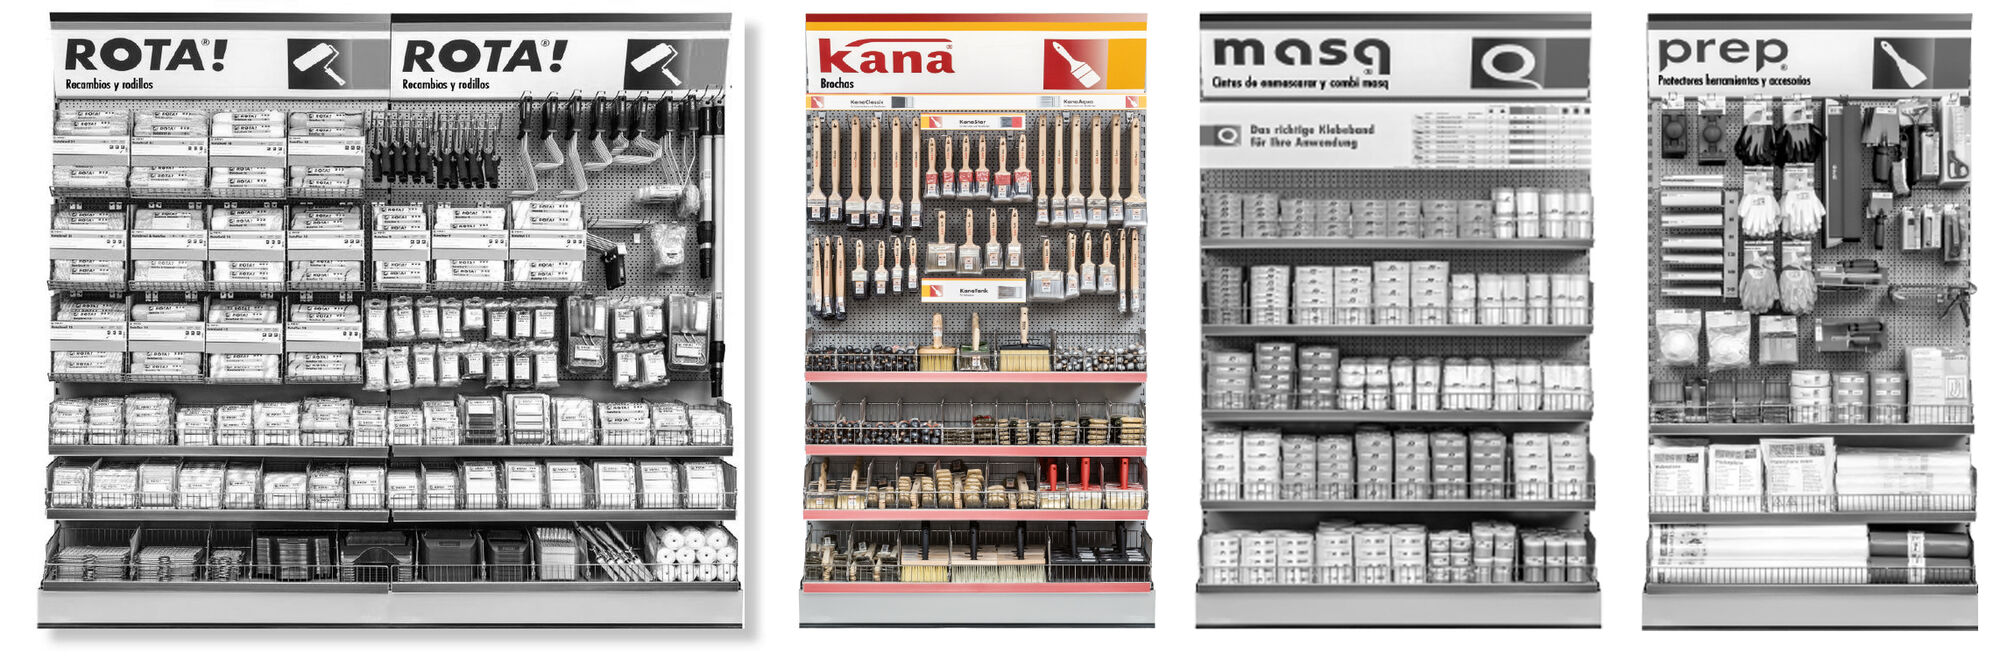 kana-display-full.jpg